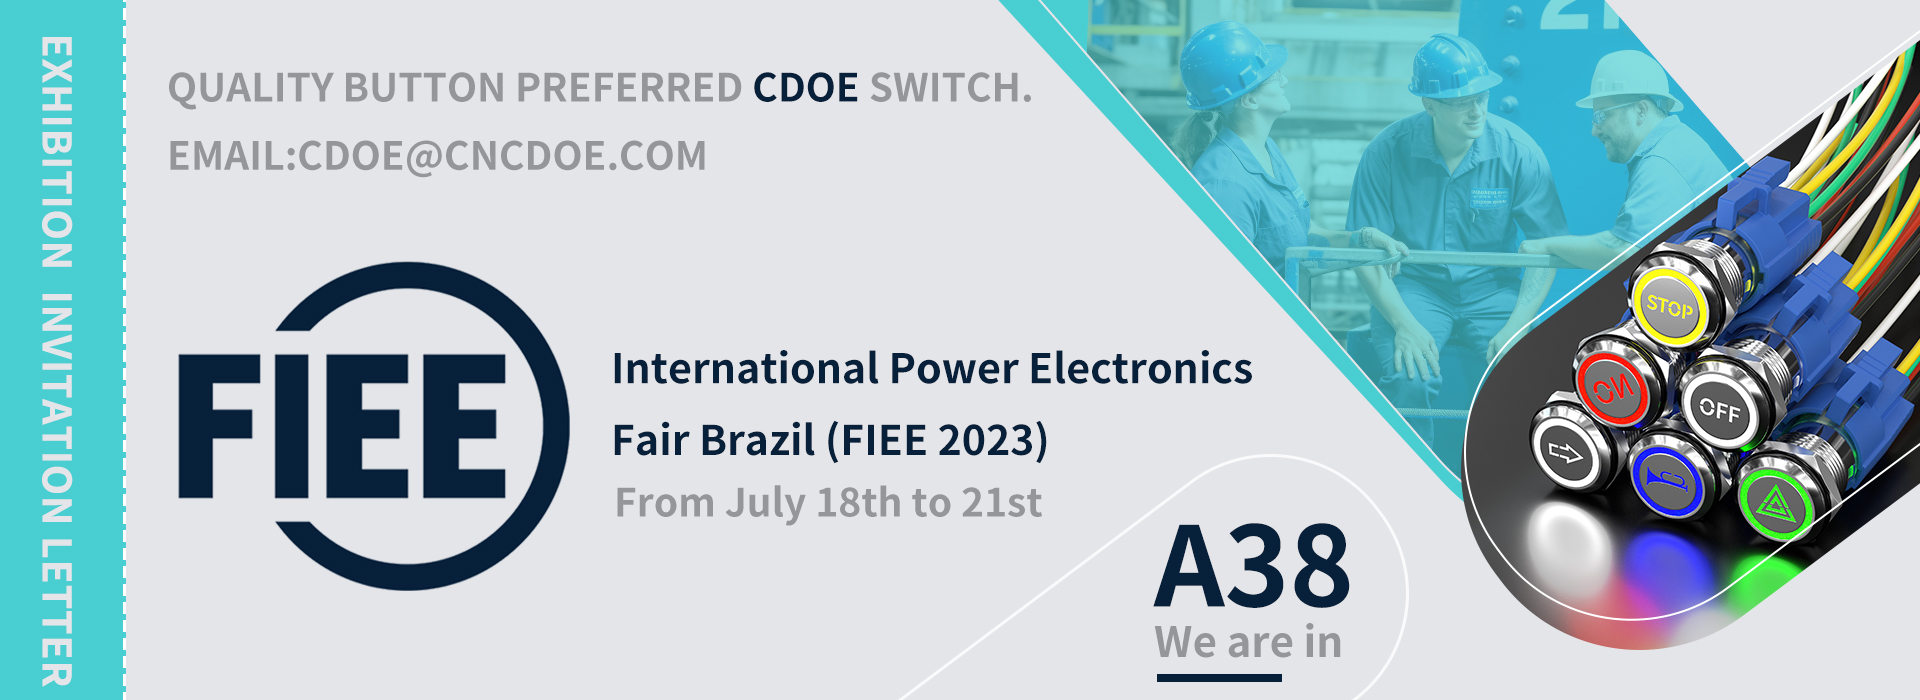 Brazil Electronics fair